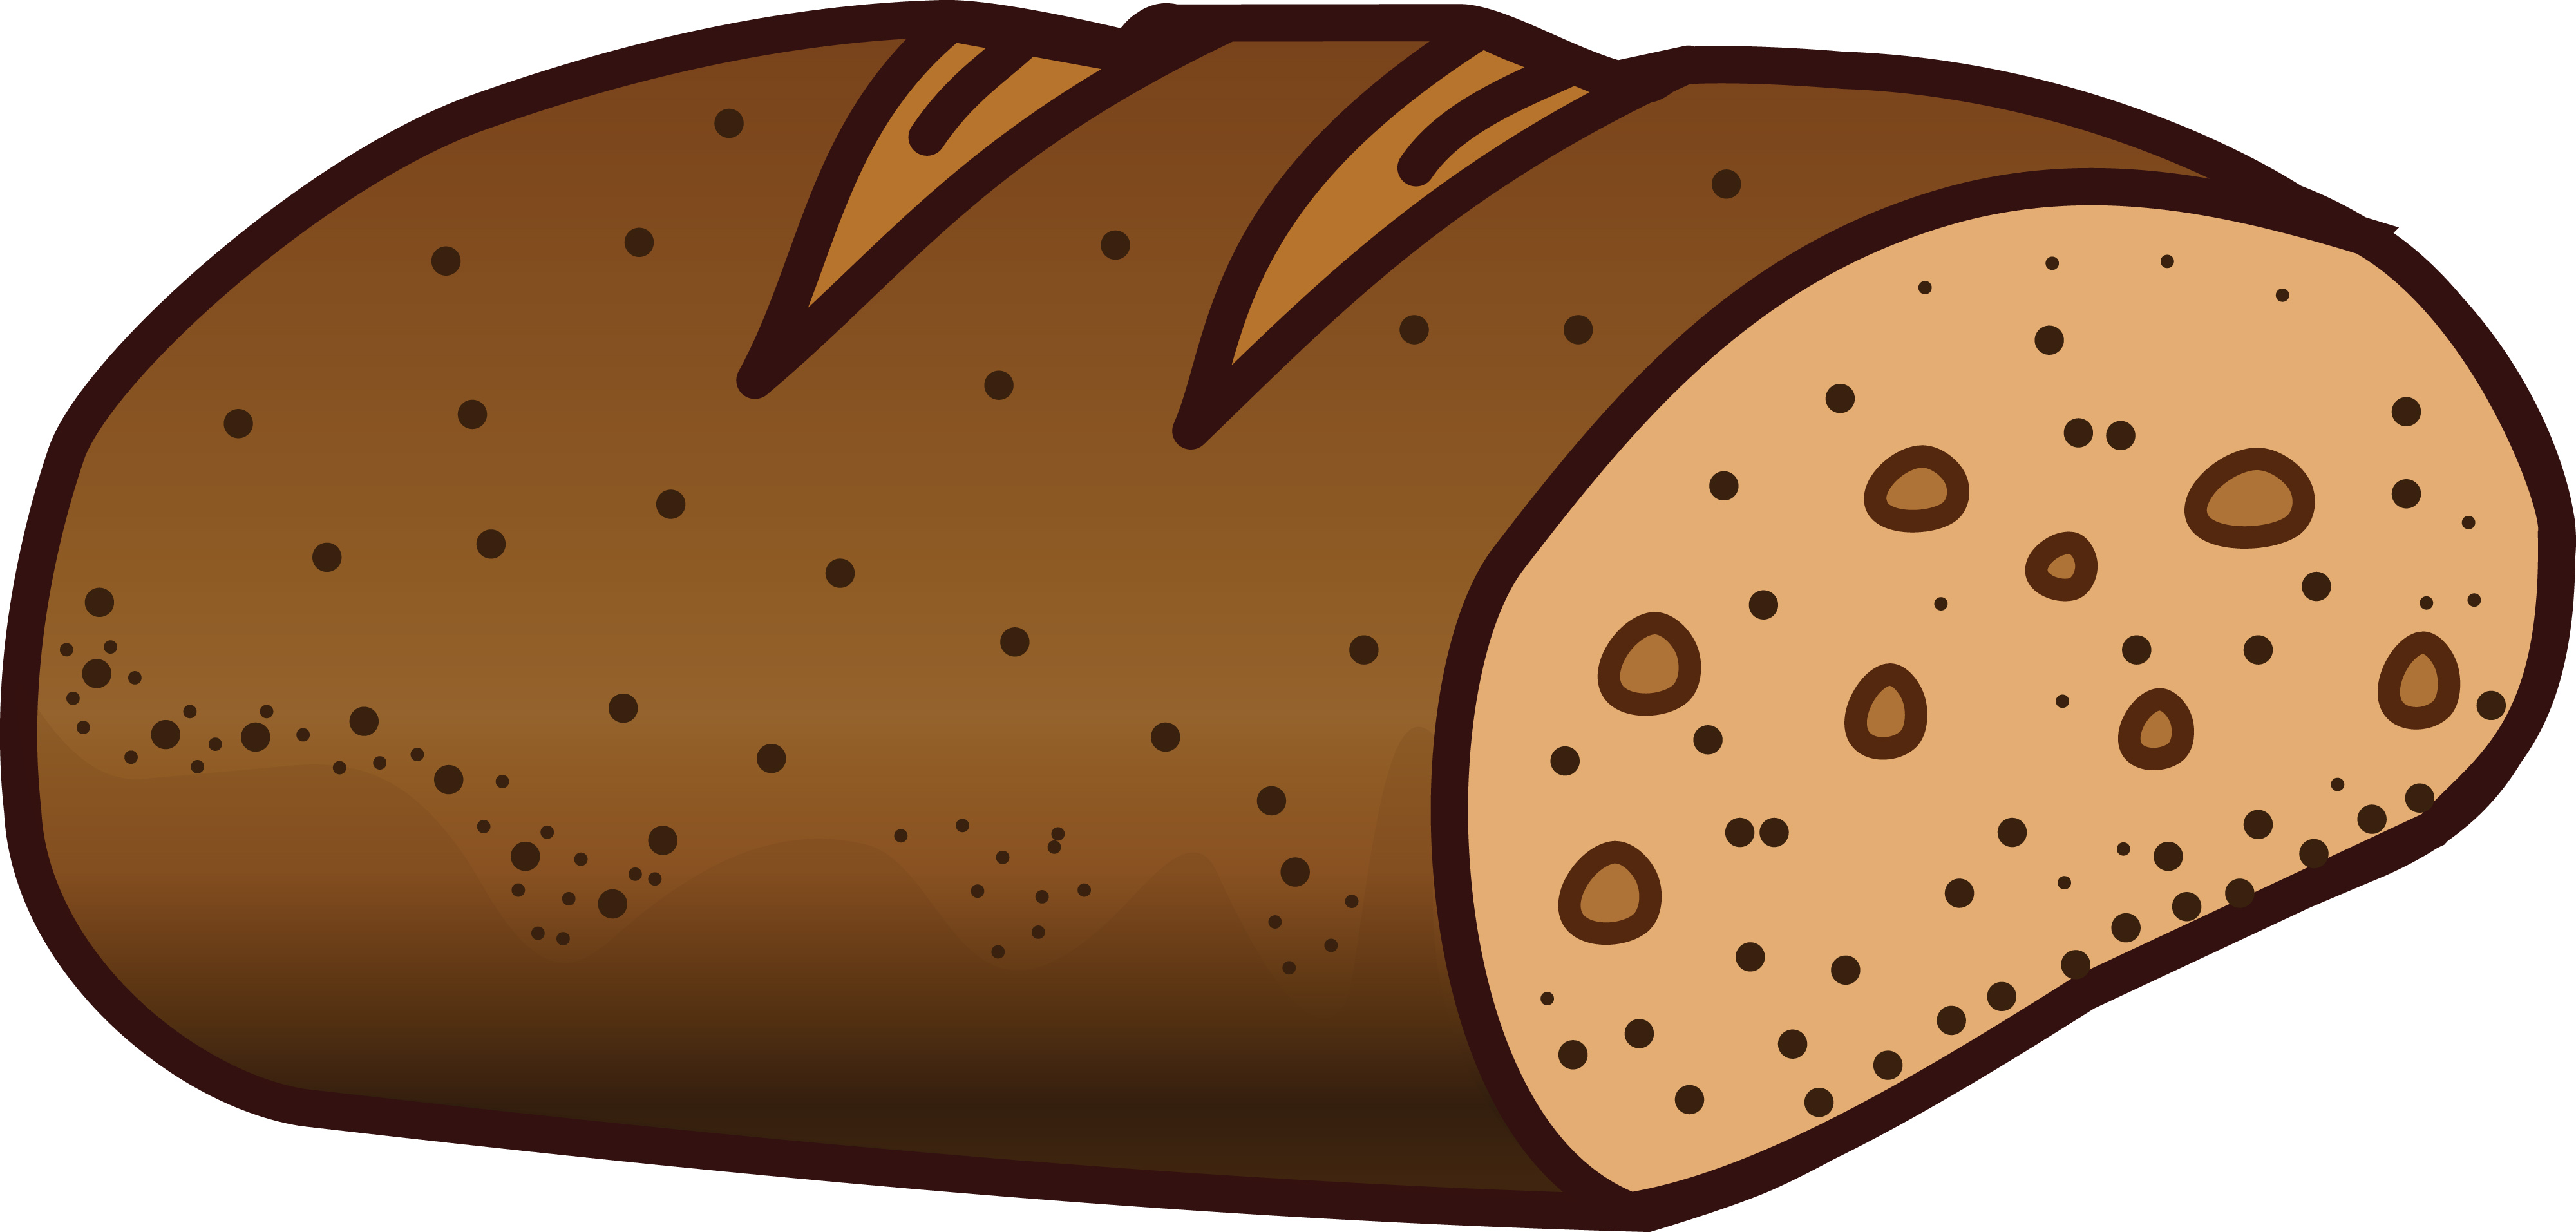 brown bread clipart